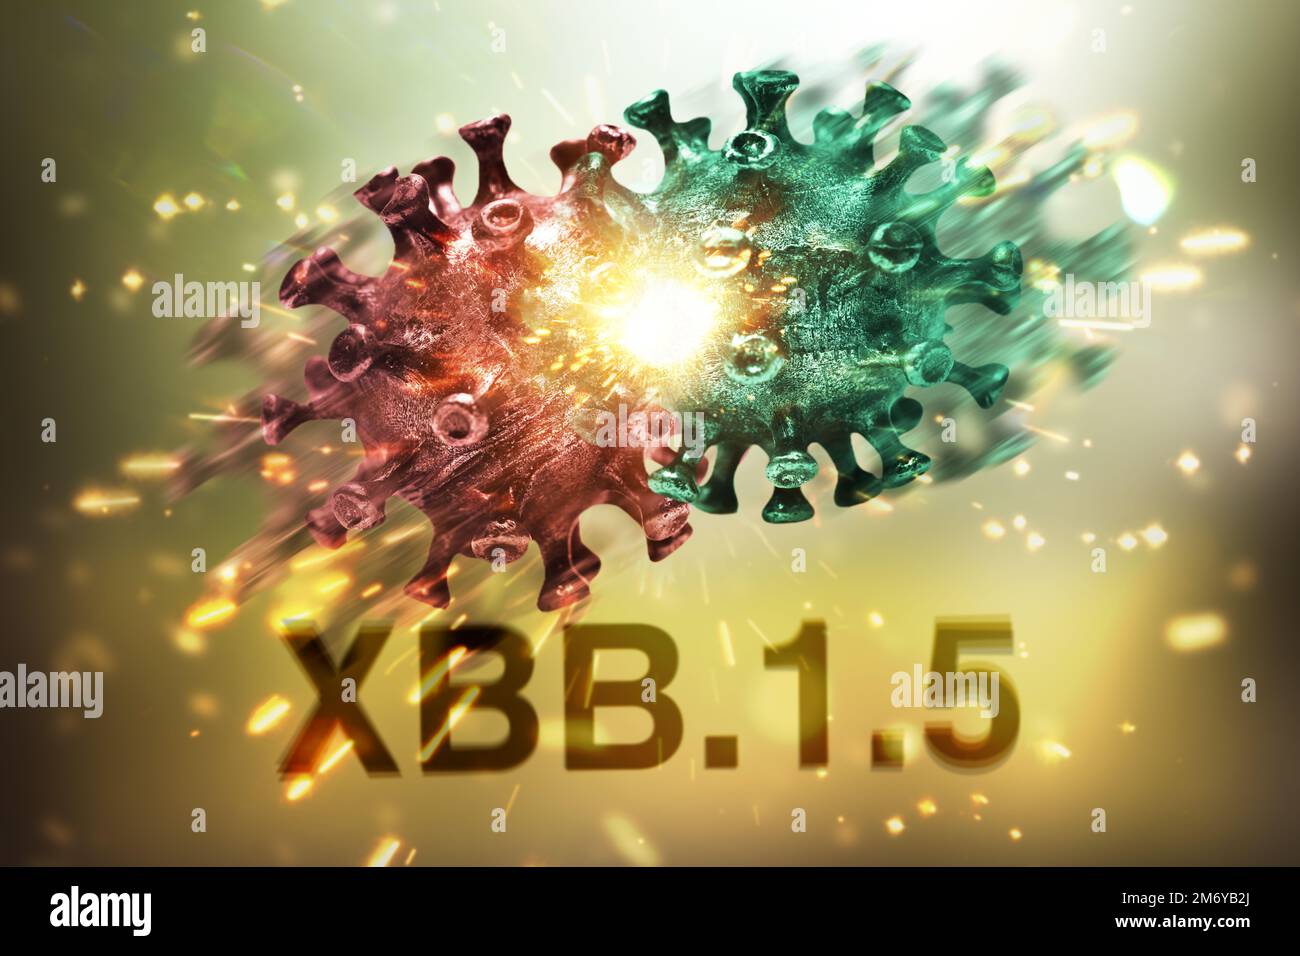 Variante corona XBB.1,5, immagine simbolica Foto Stock